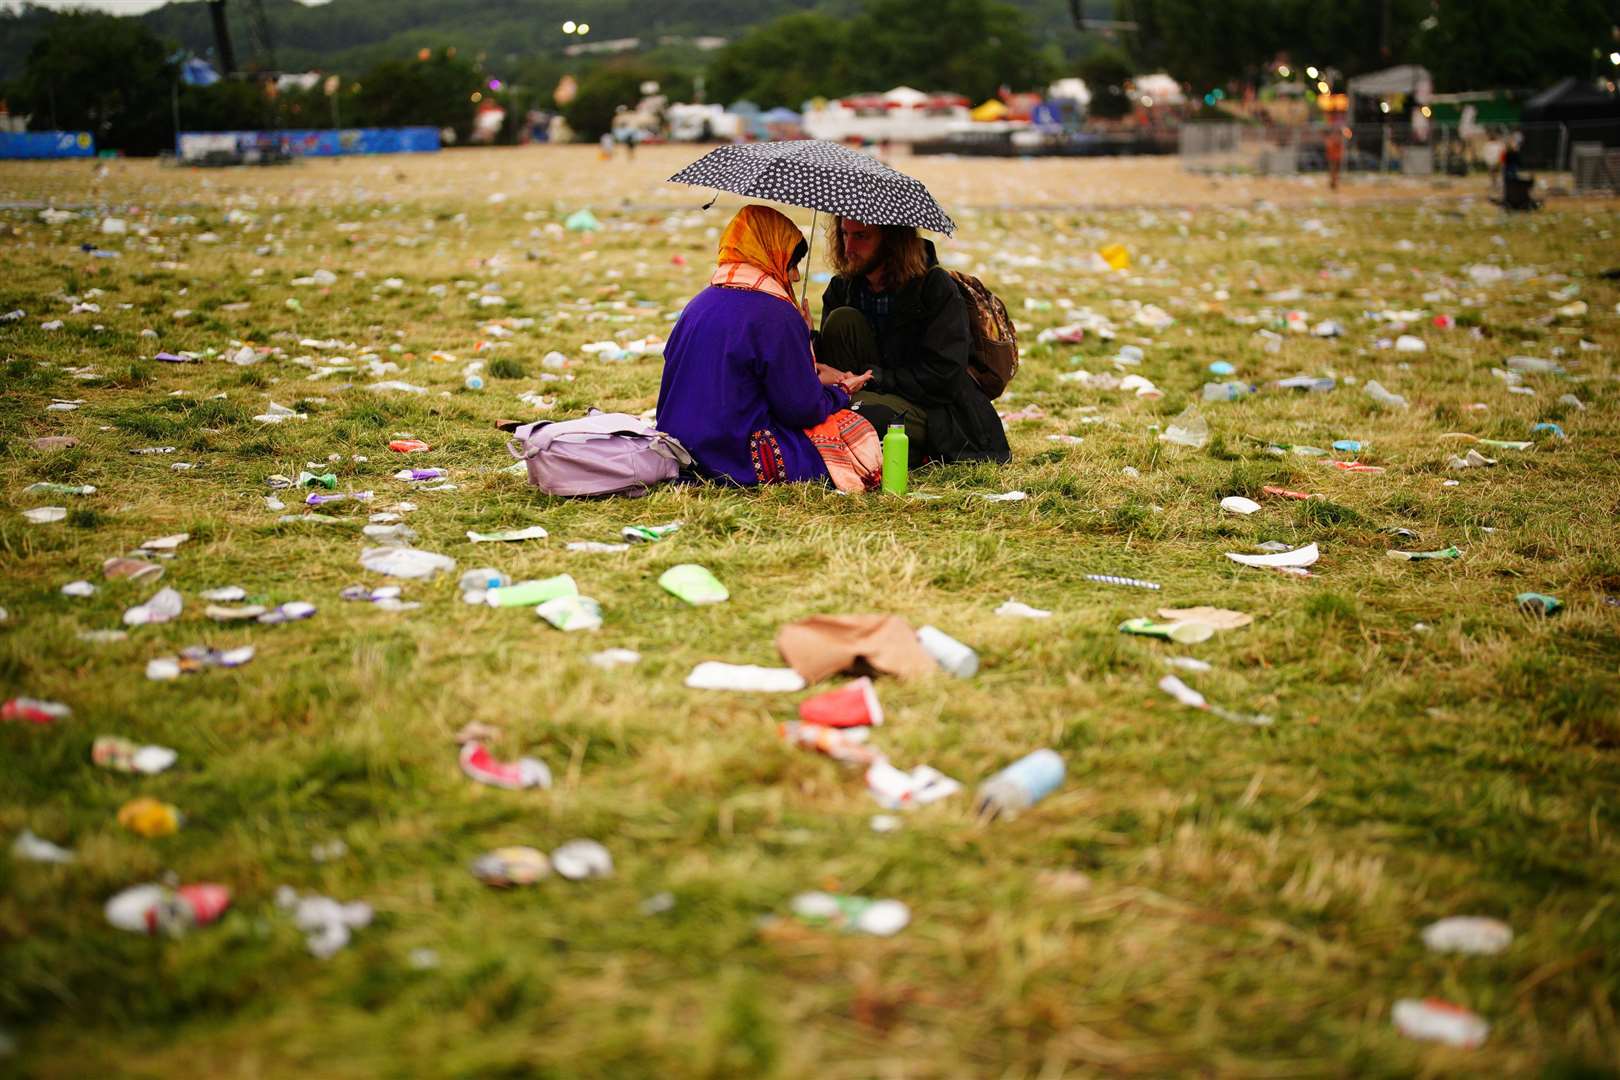 Festival-goers sit amongst the waste (Ben Birchall/PA)